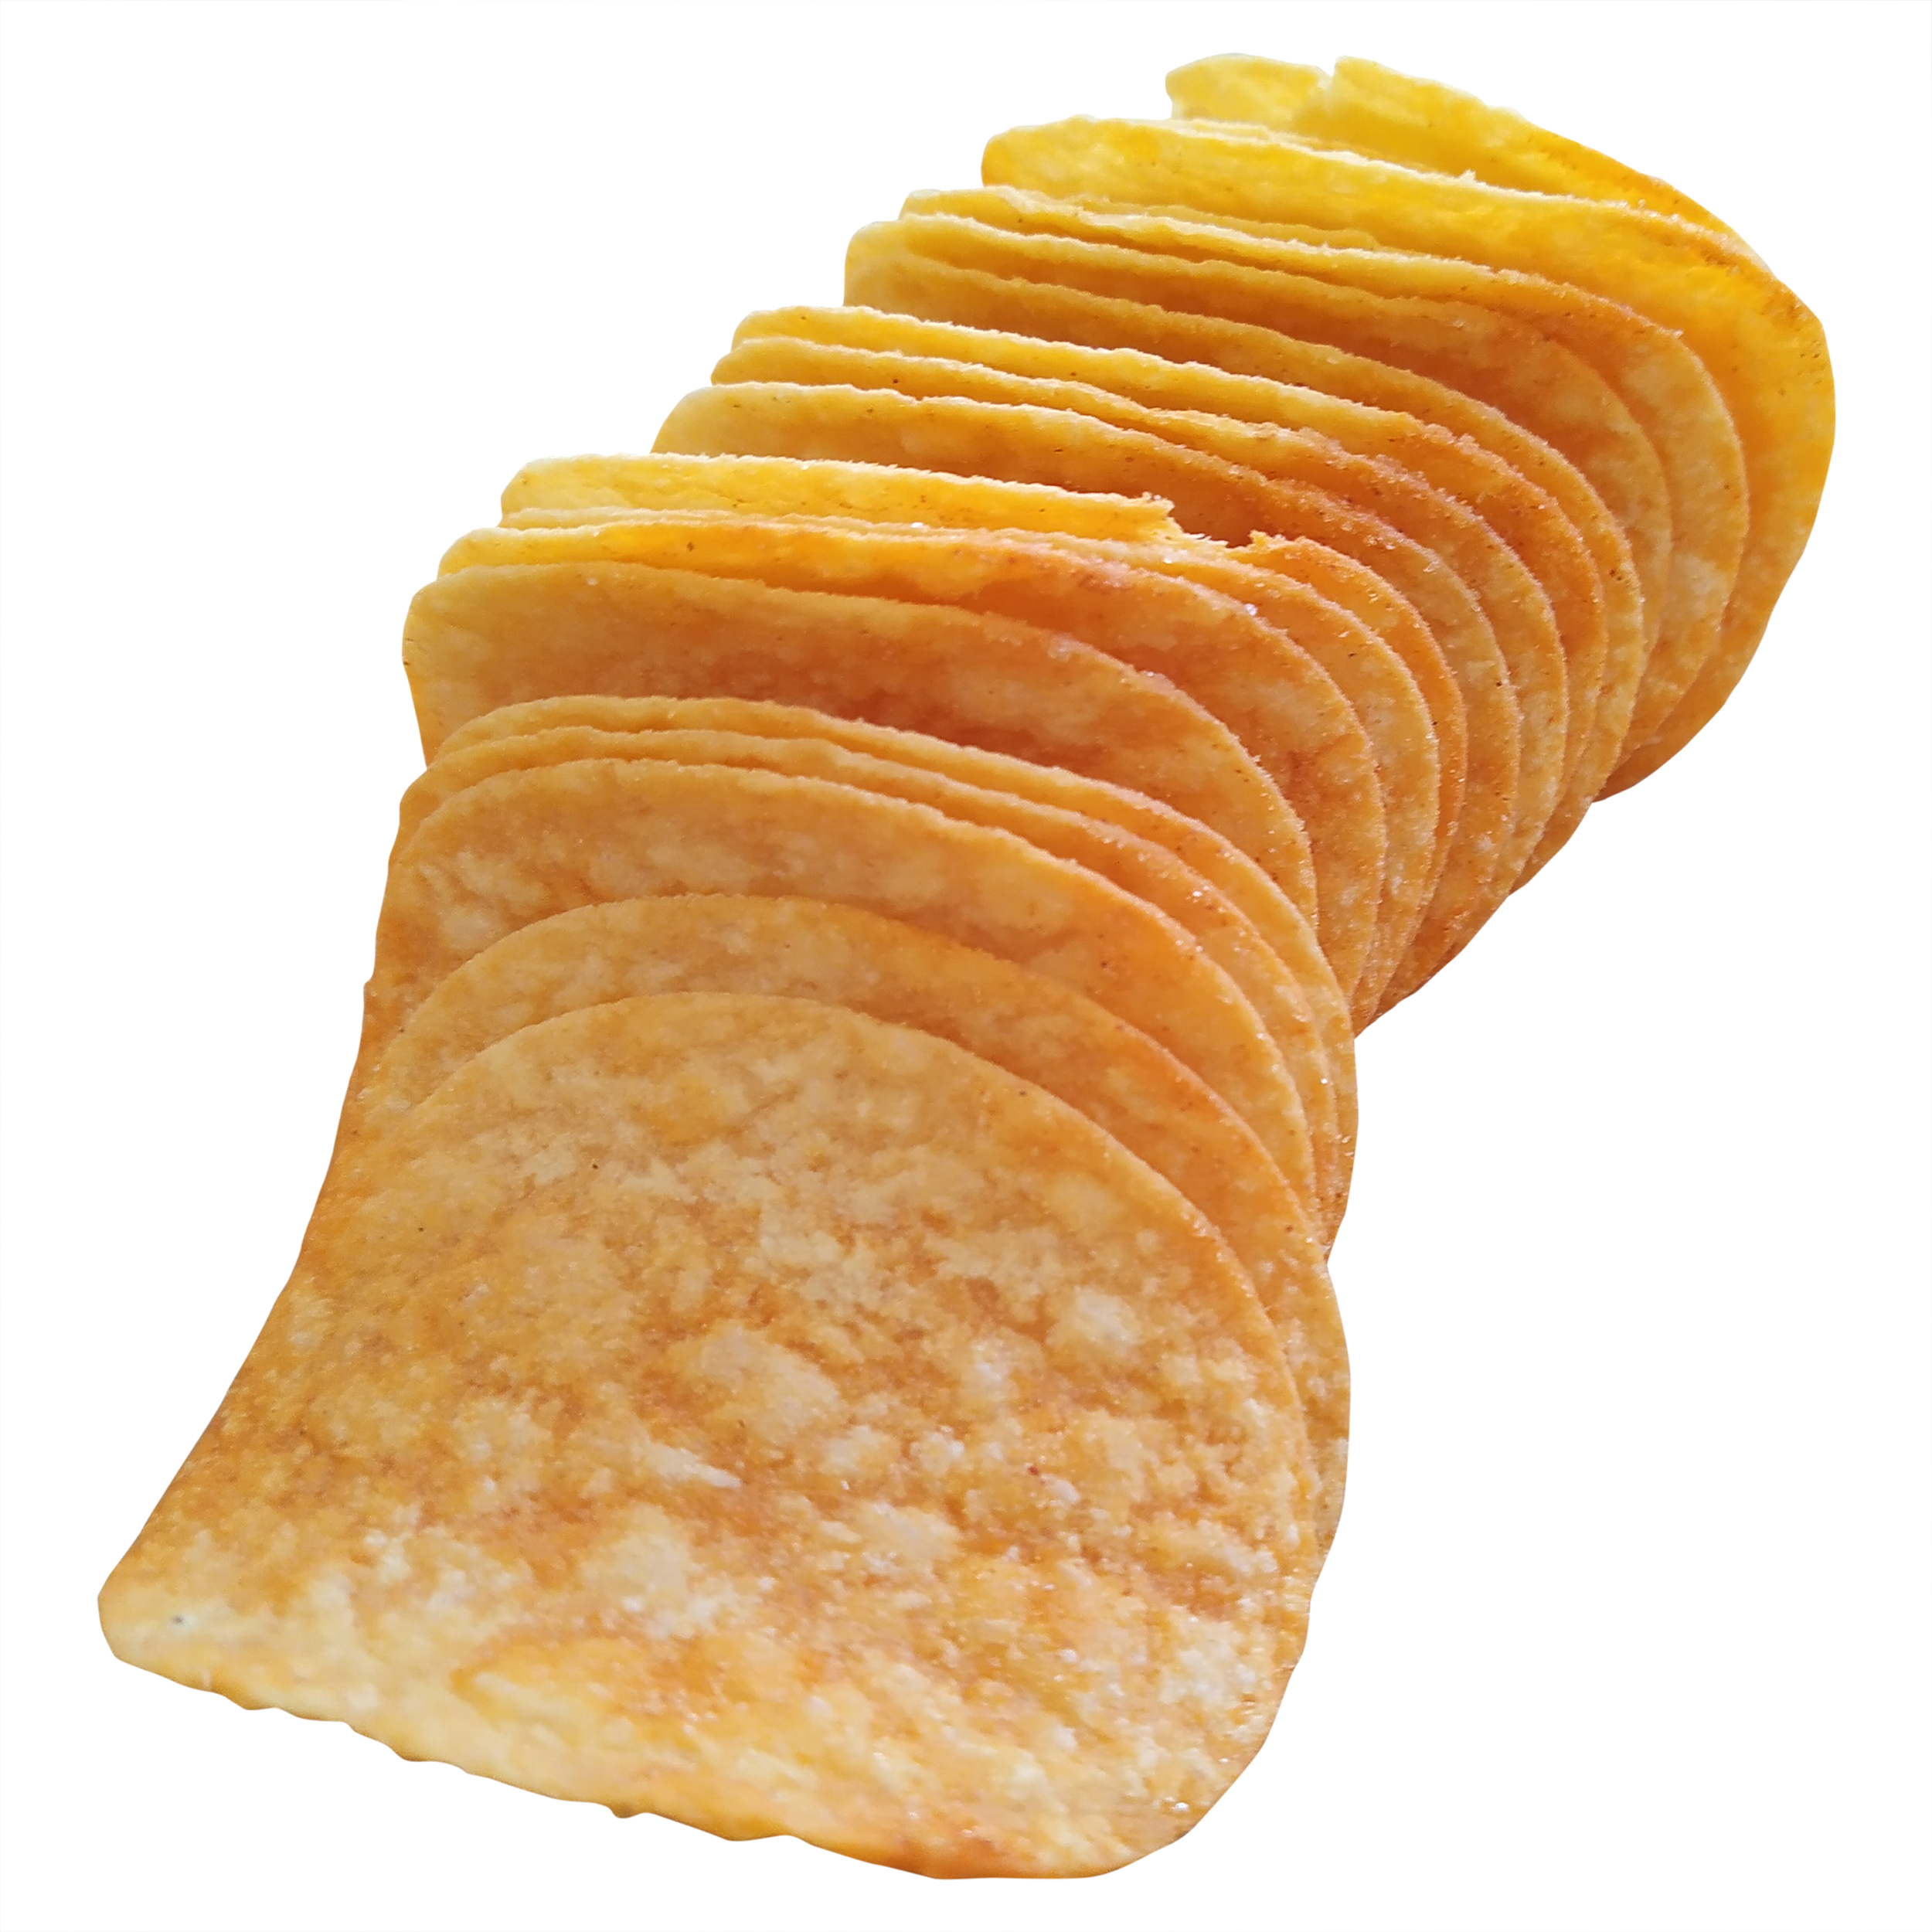 Pringles Paprika Potato Chips 40g (12 Pack)